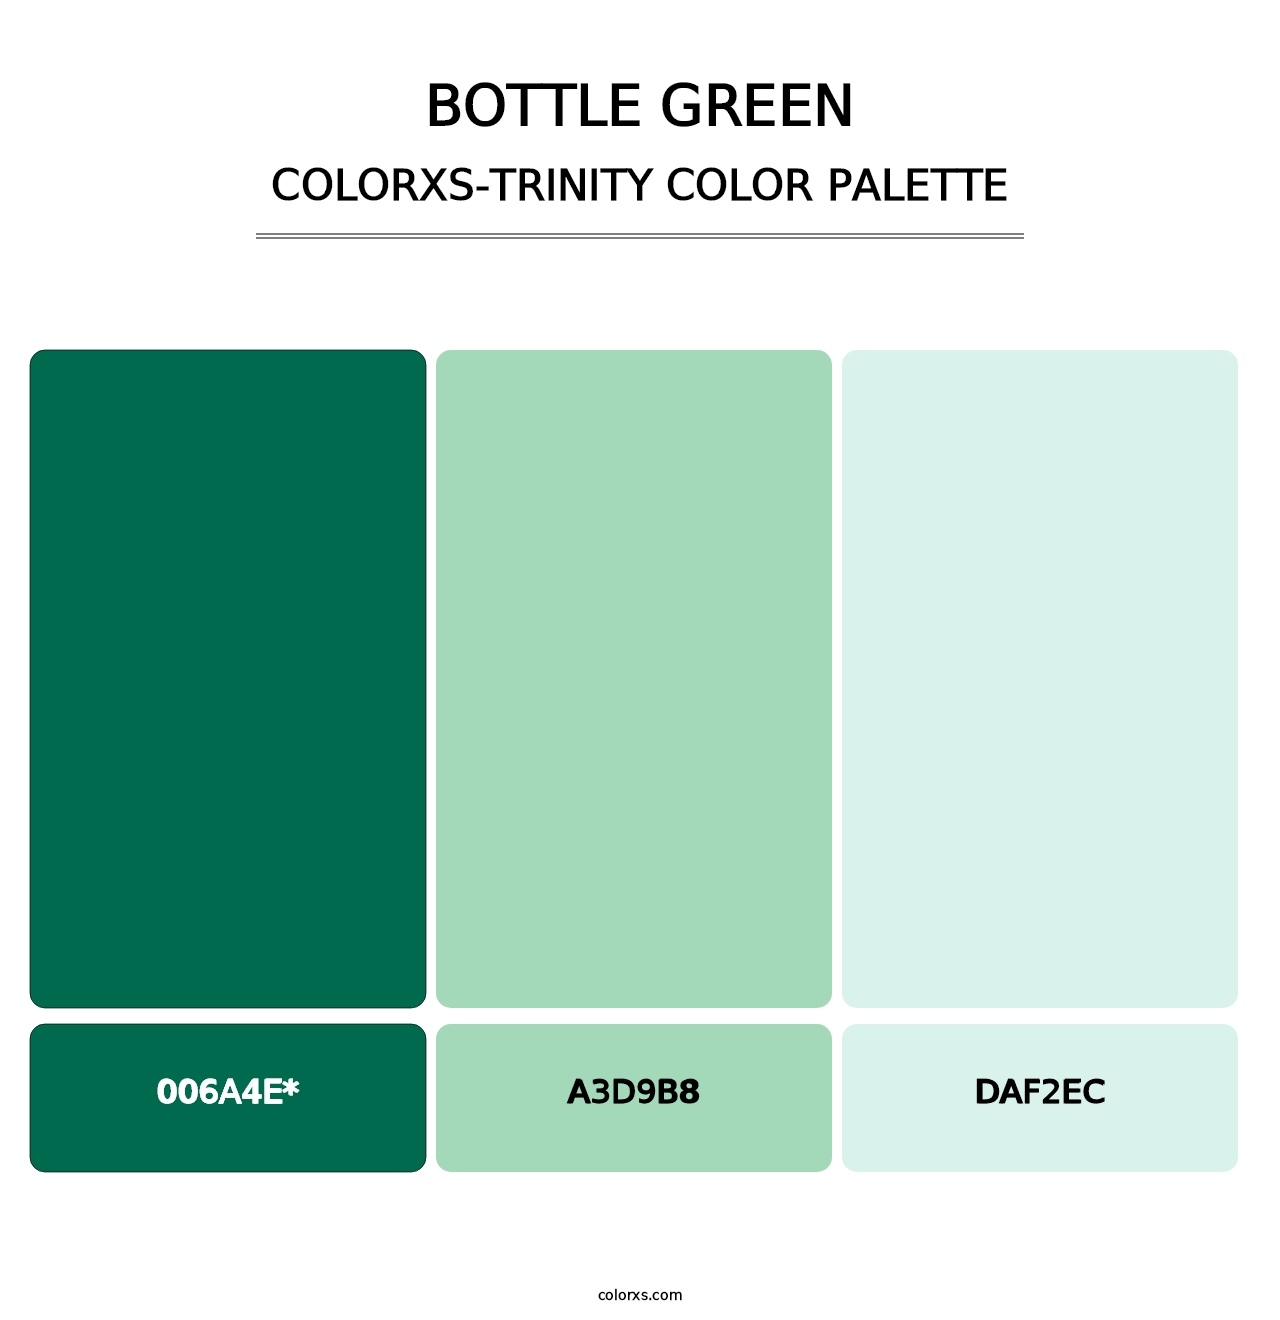 Bottle Green - Colorxs Trinity Palette